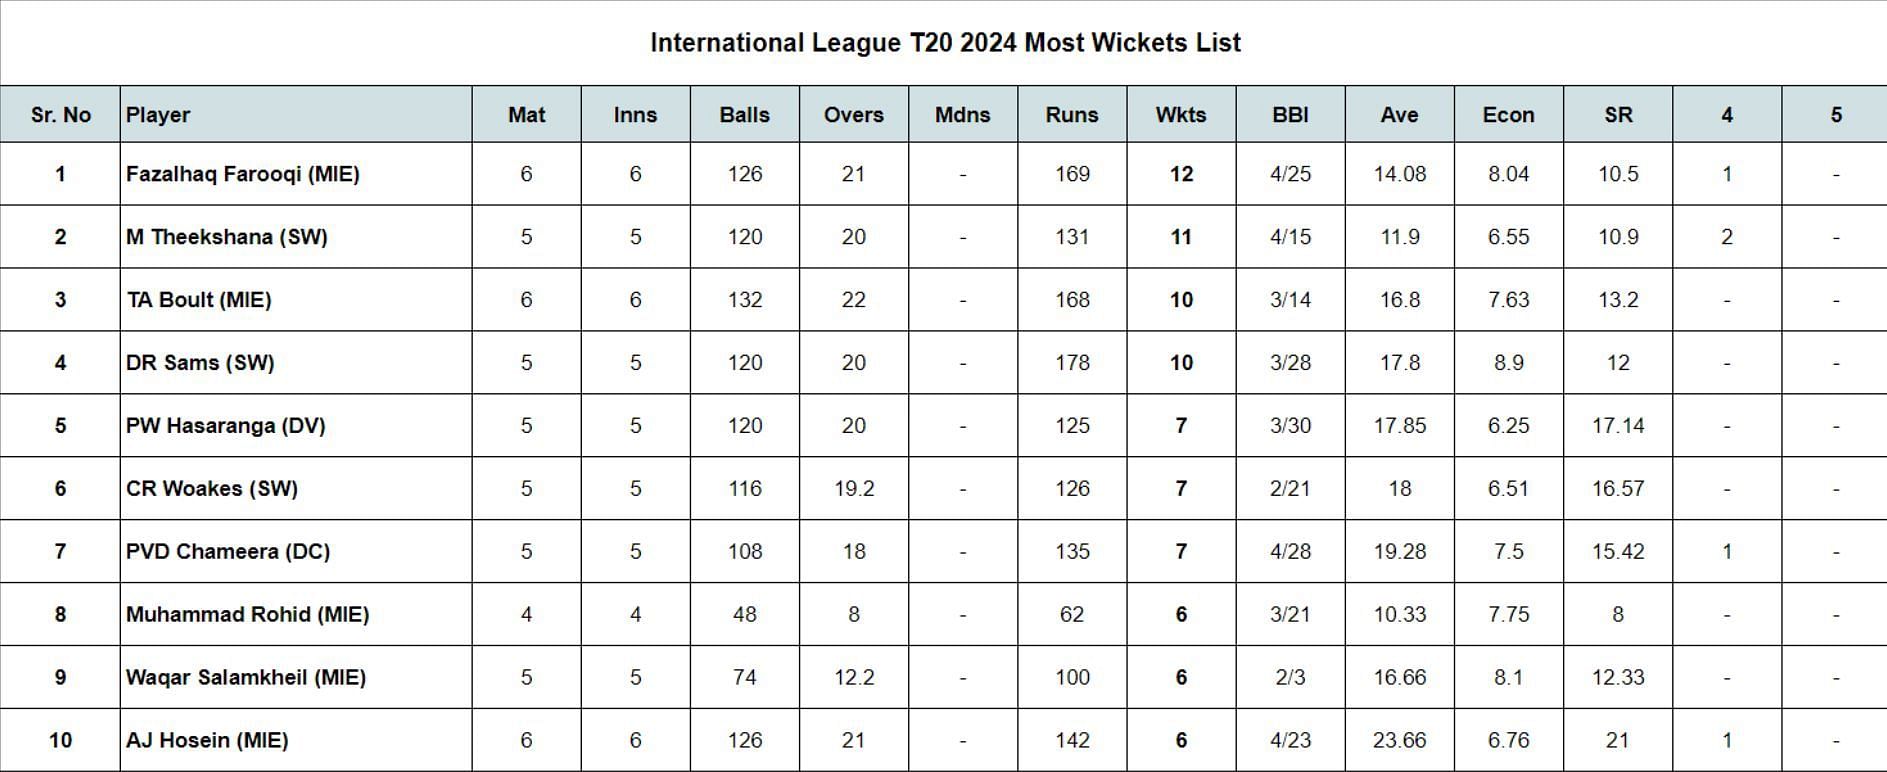 International League T20 2024 Most Wickets List updated after Match 15